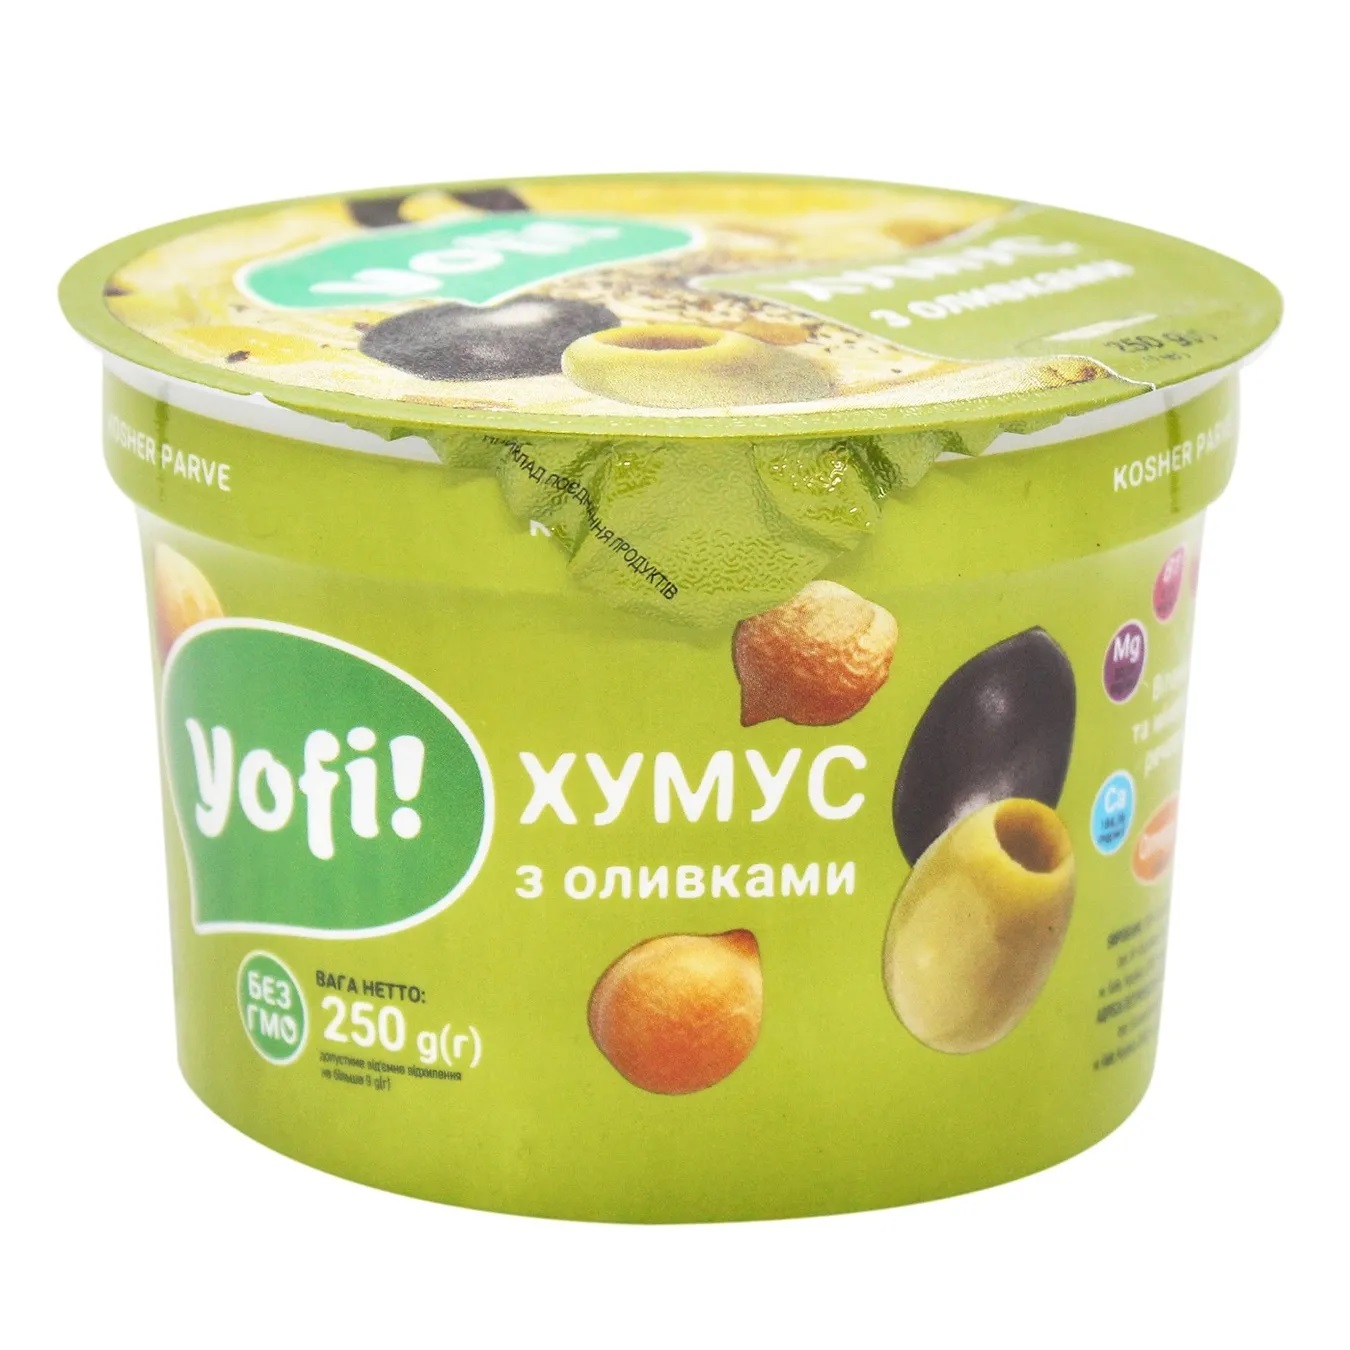 Хумус Yofi! з оливками 250г